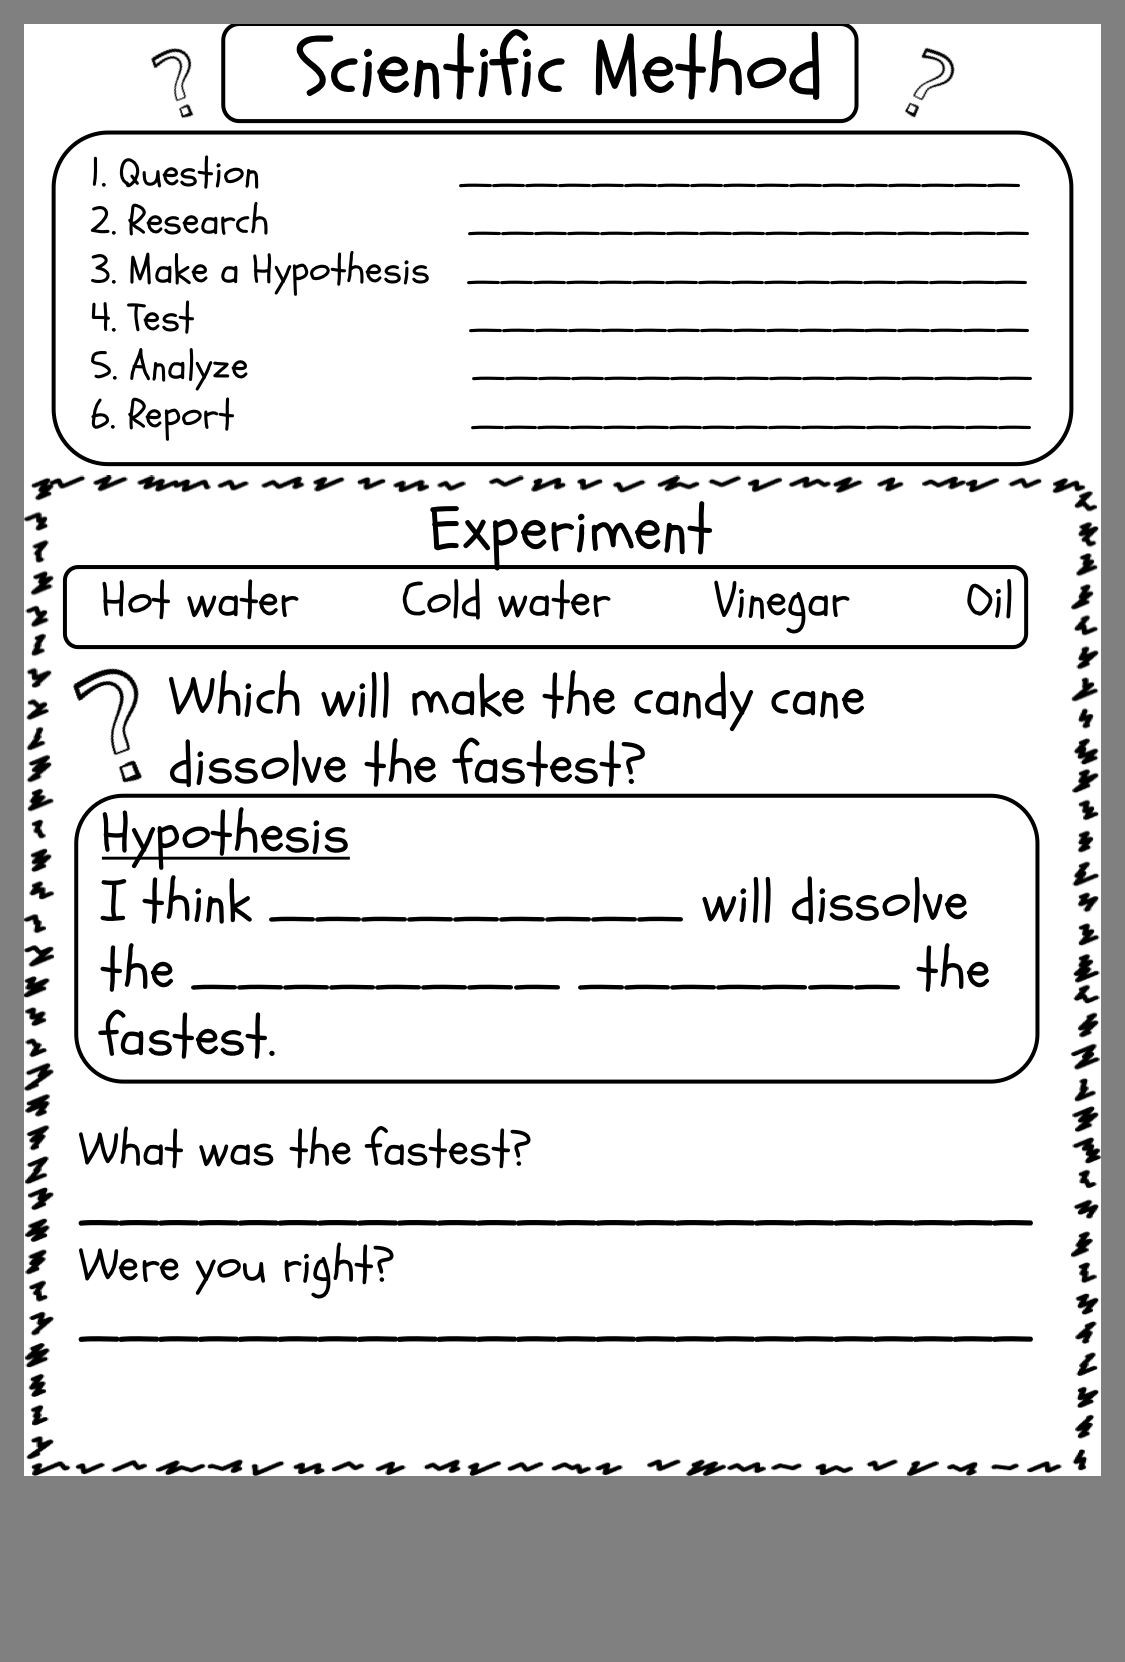 Scientific Method Examples Worksheet Scientific Method Experiment Worksheet